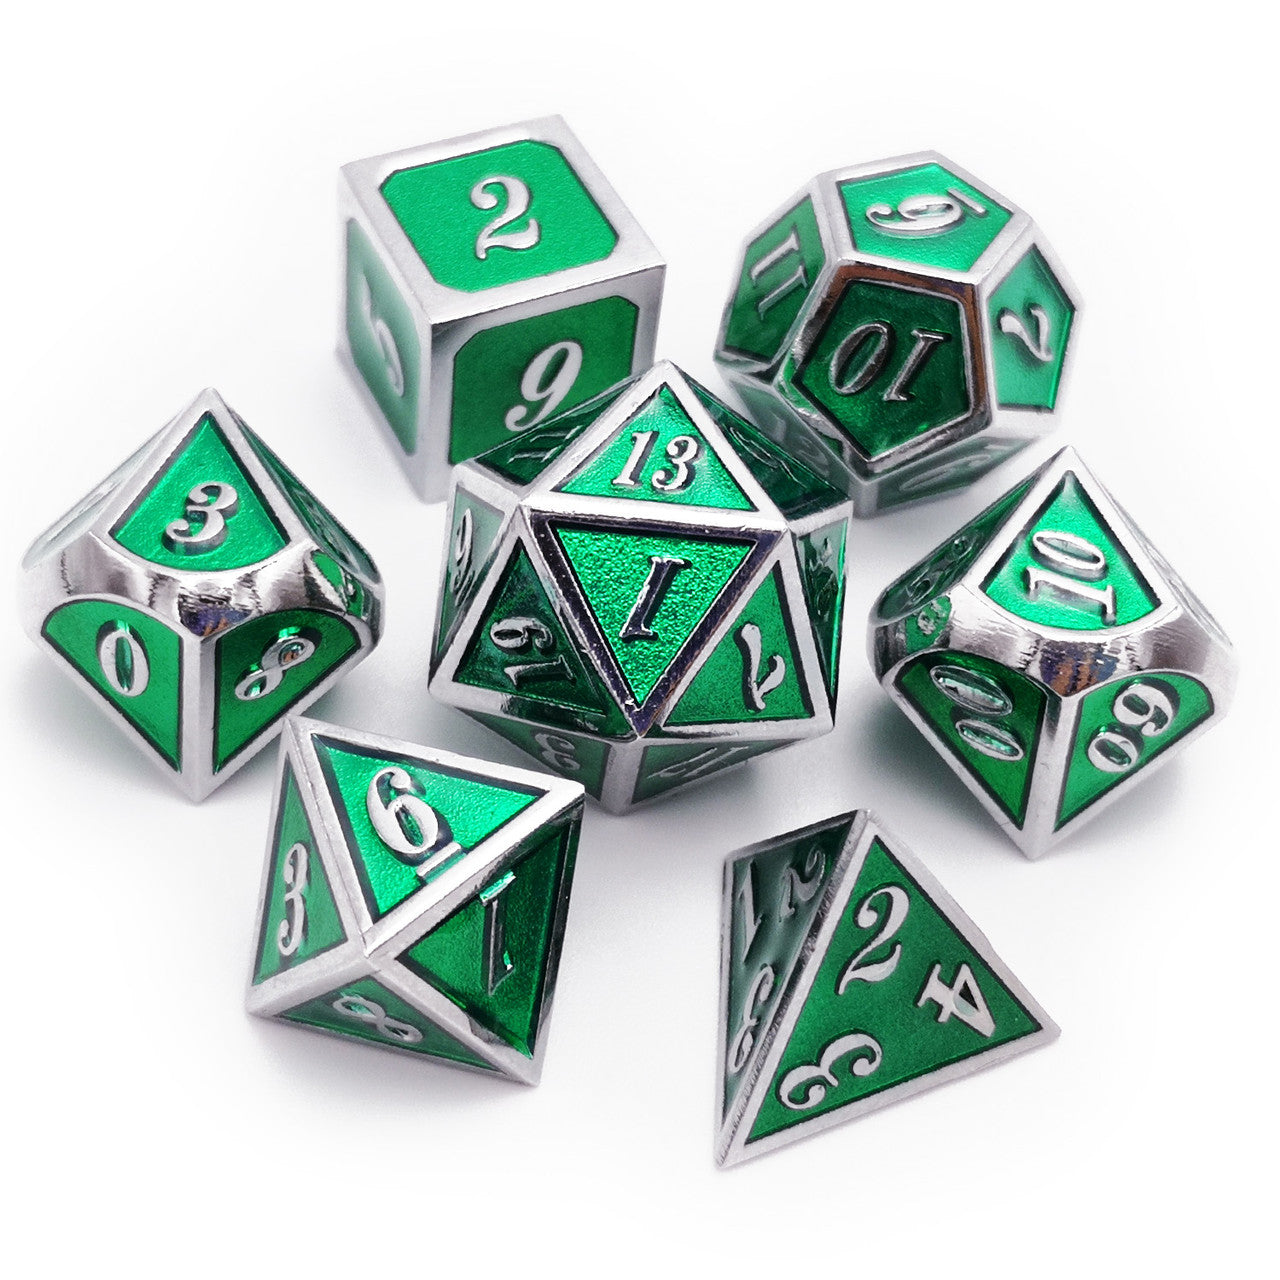 Metal dice set Silver Emerald Green